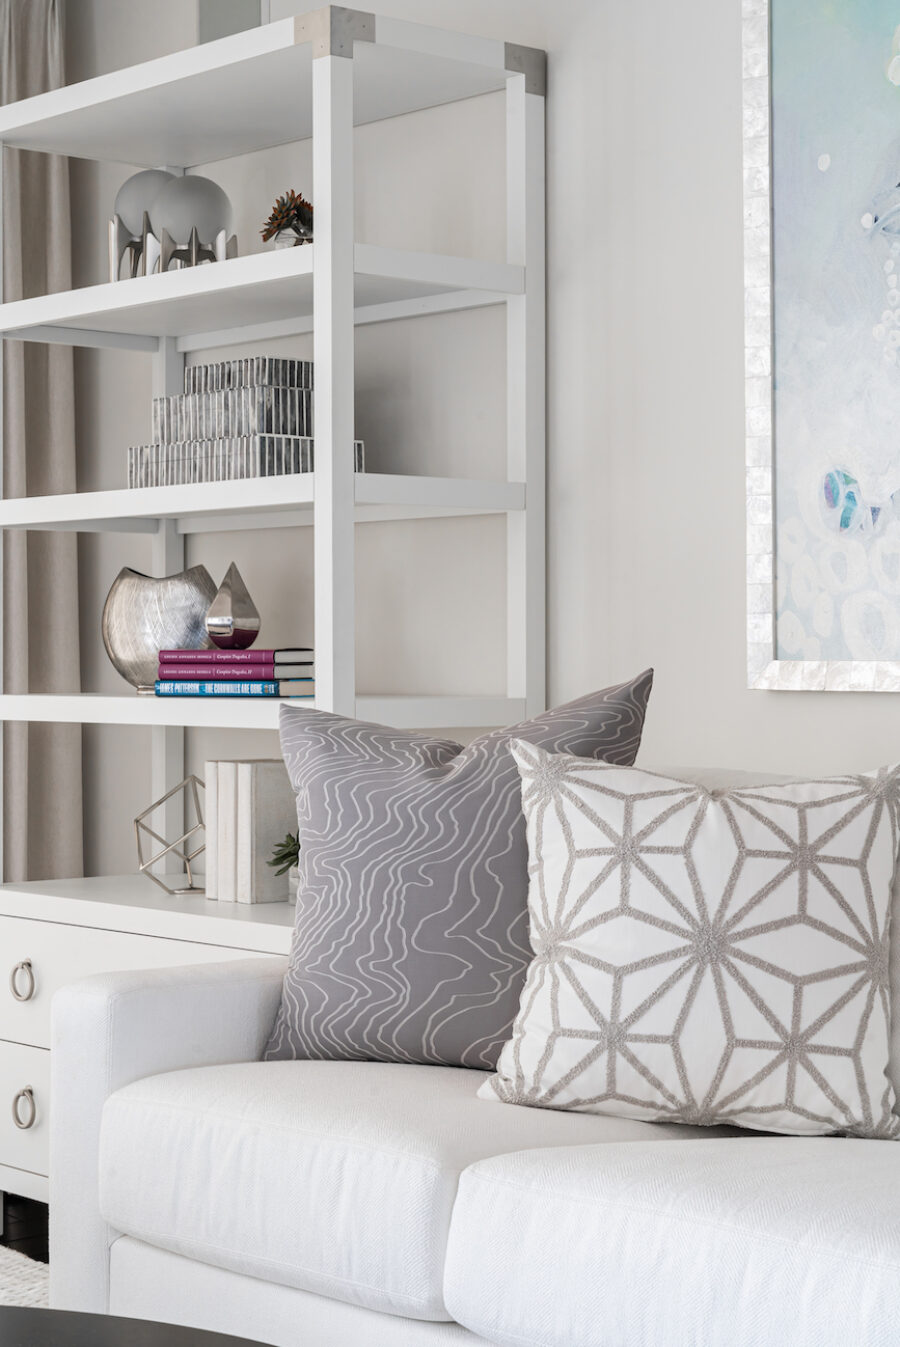 design-west-patterned-accent-pillows-bookshelves